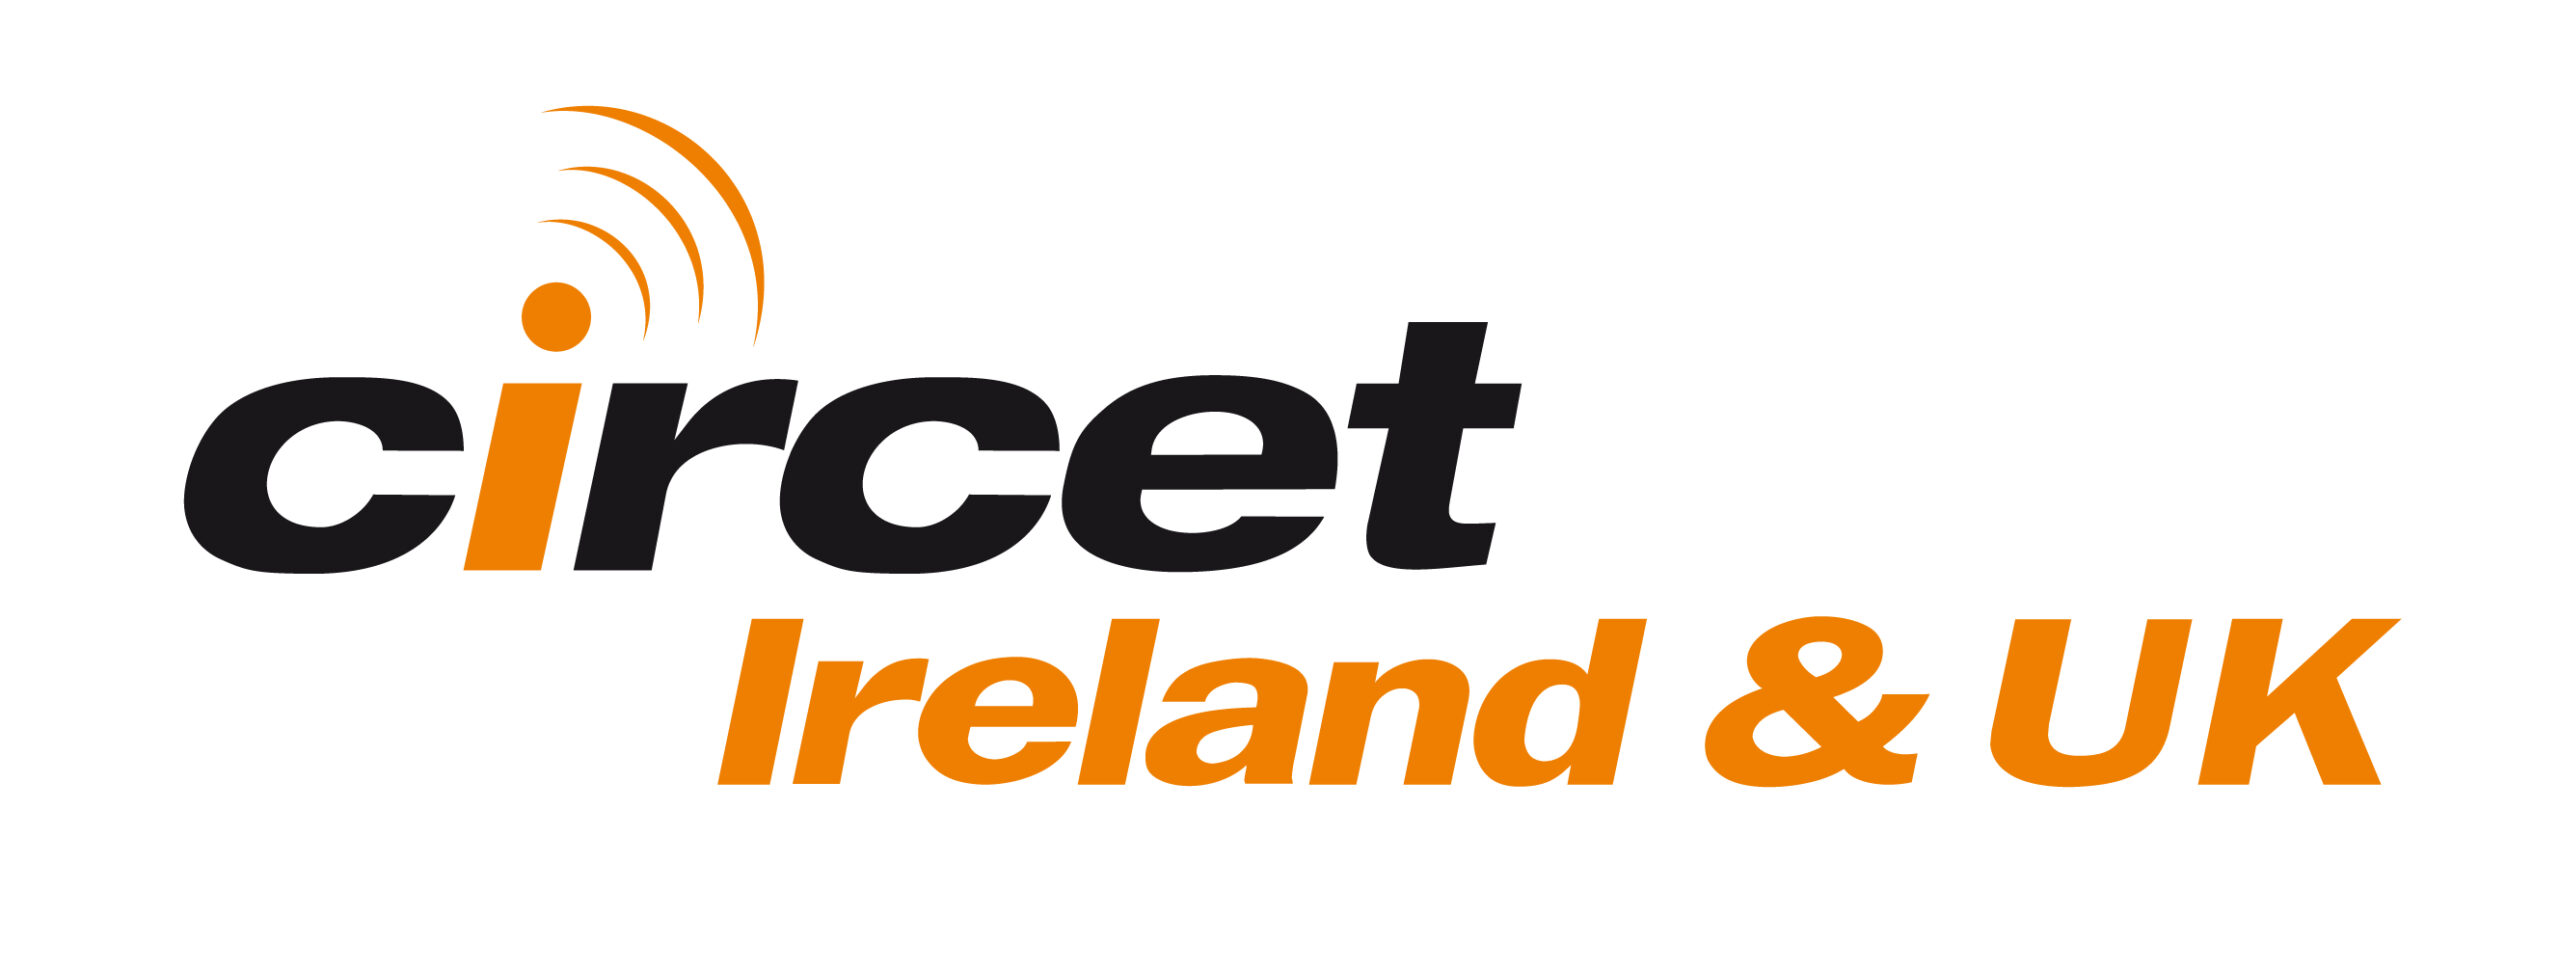 Circet Ireland & UK